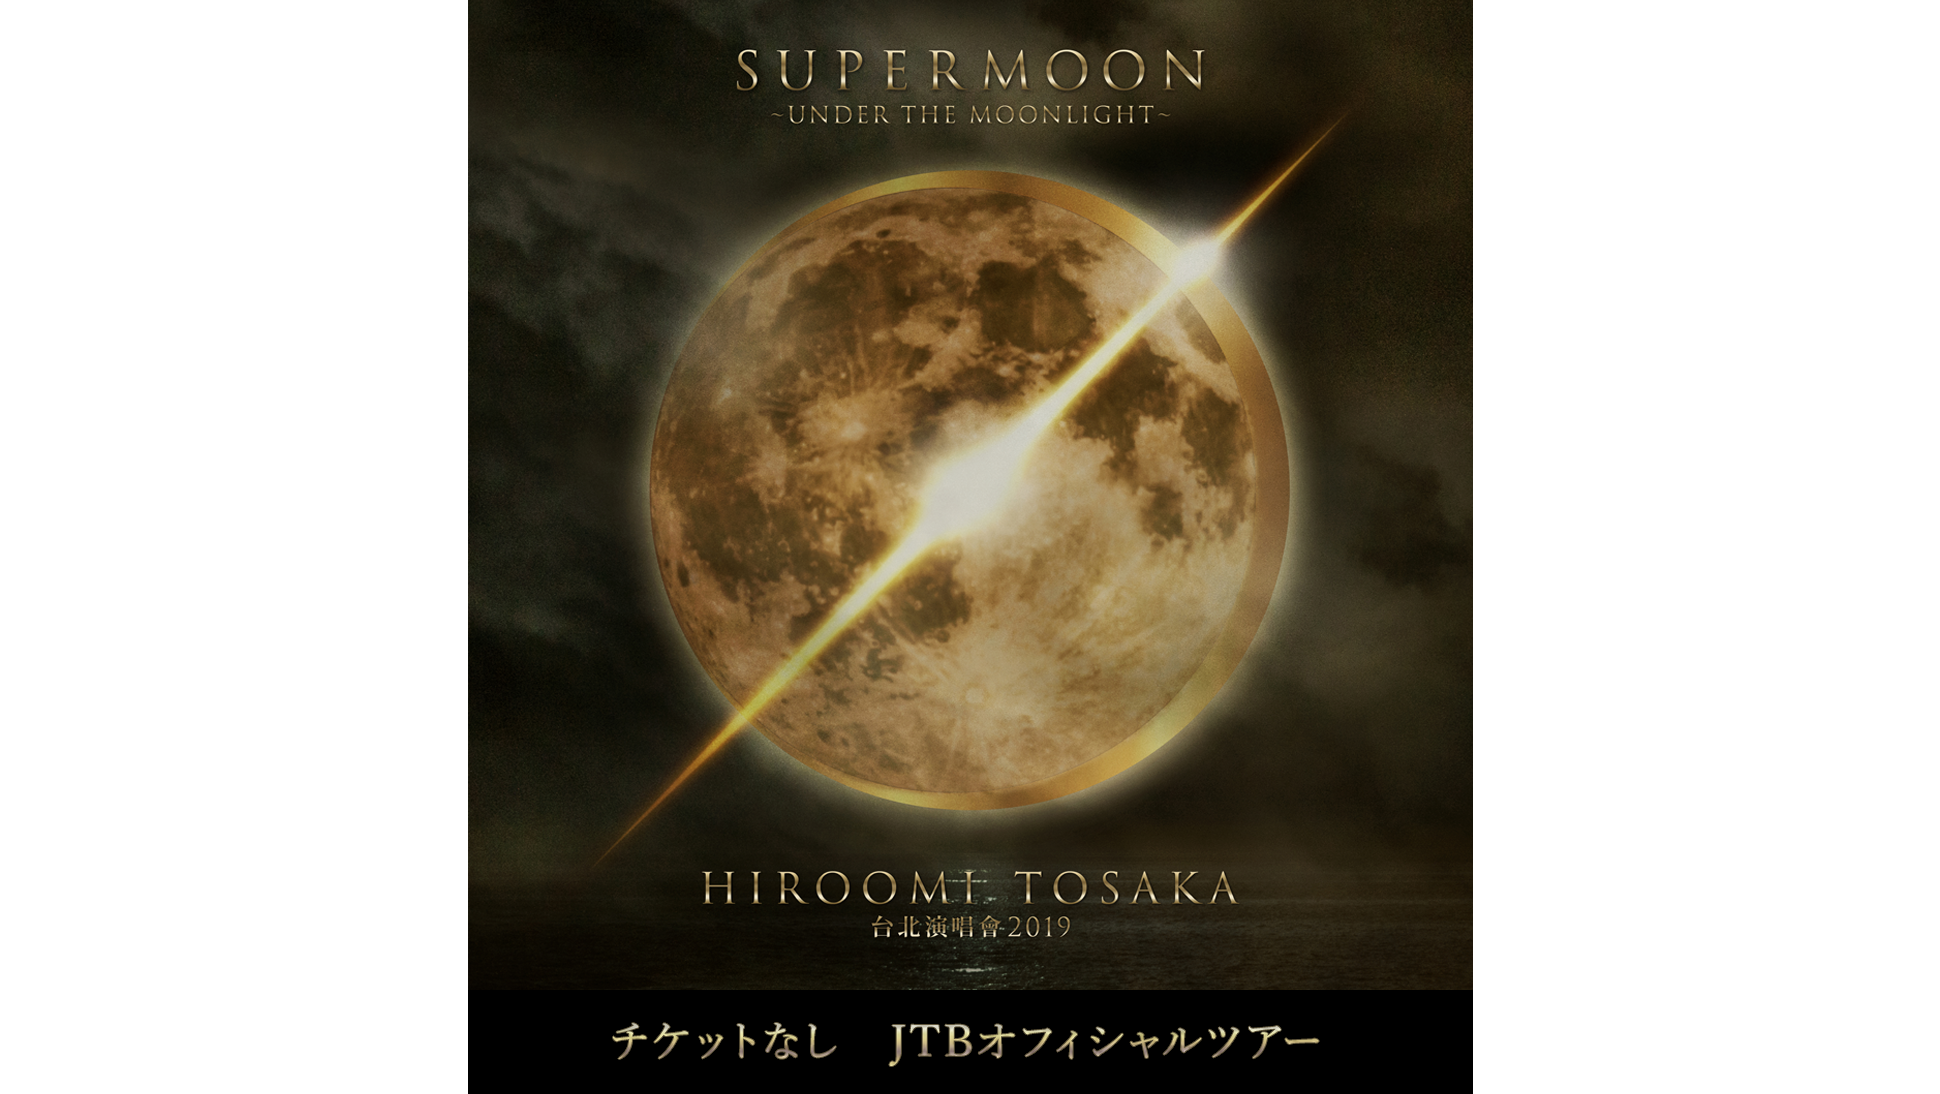 HIROOMI TOSAKA 台北演唱會 2019 SUPERMOON<br> ～UNDER THE MOONLIGHT～<br>チケットなし JTBアクセスツアー